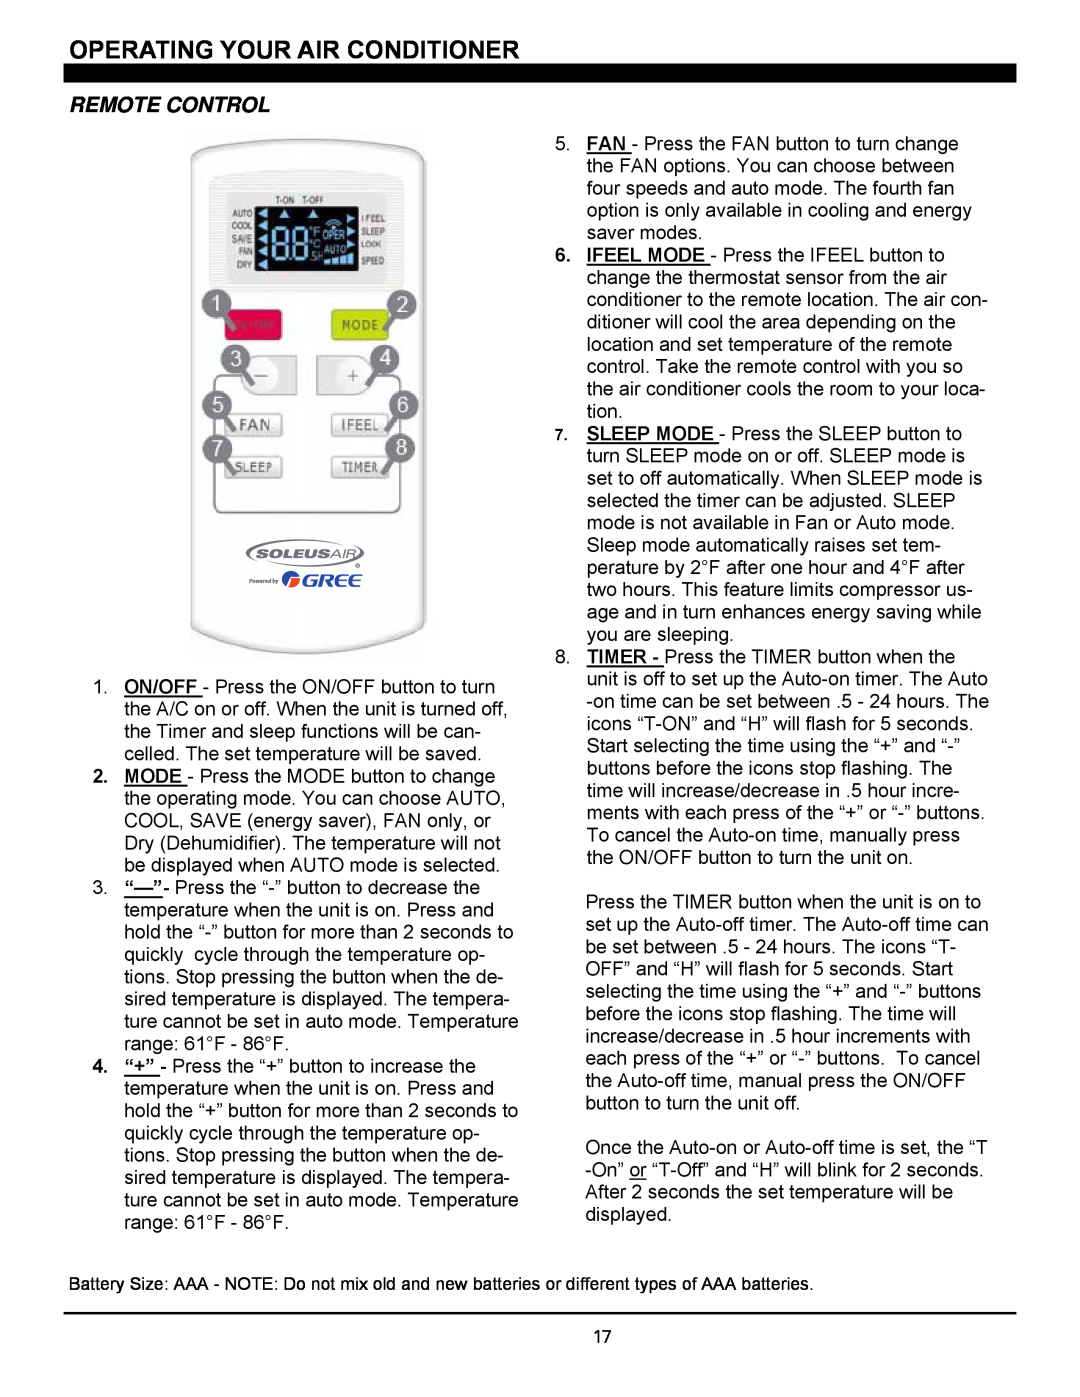 Soleus Air SG-CAC-08ESE manual Operating Your Air Conditioner, Remote Control 